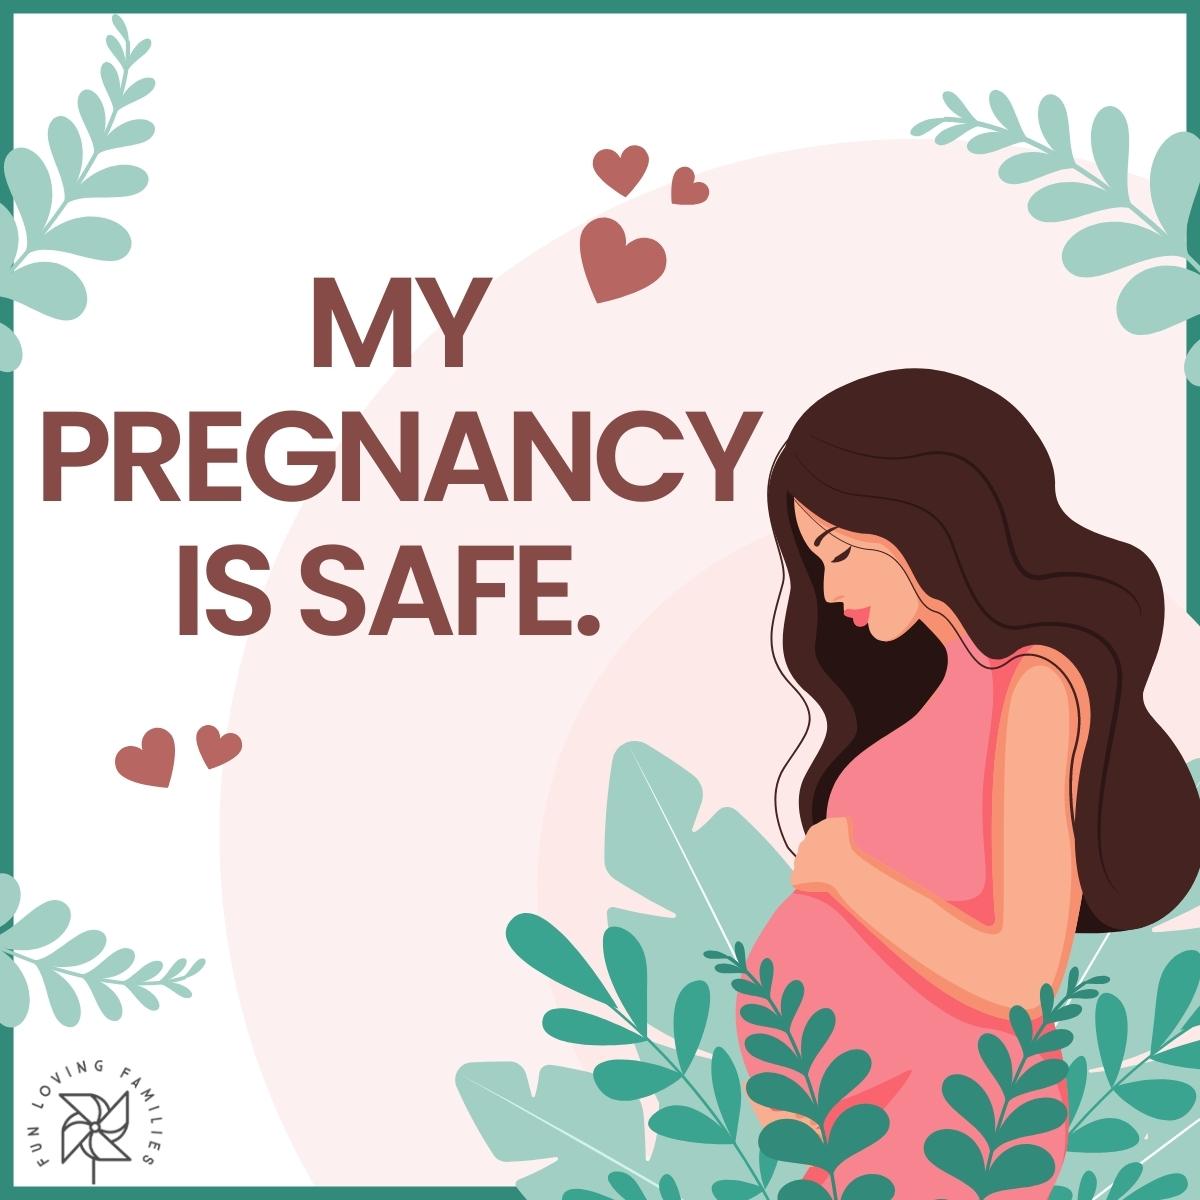 My pregnancy is safe affirmation